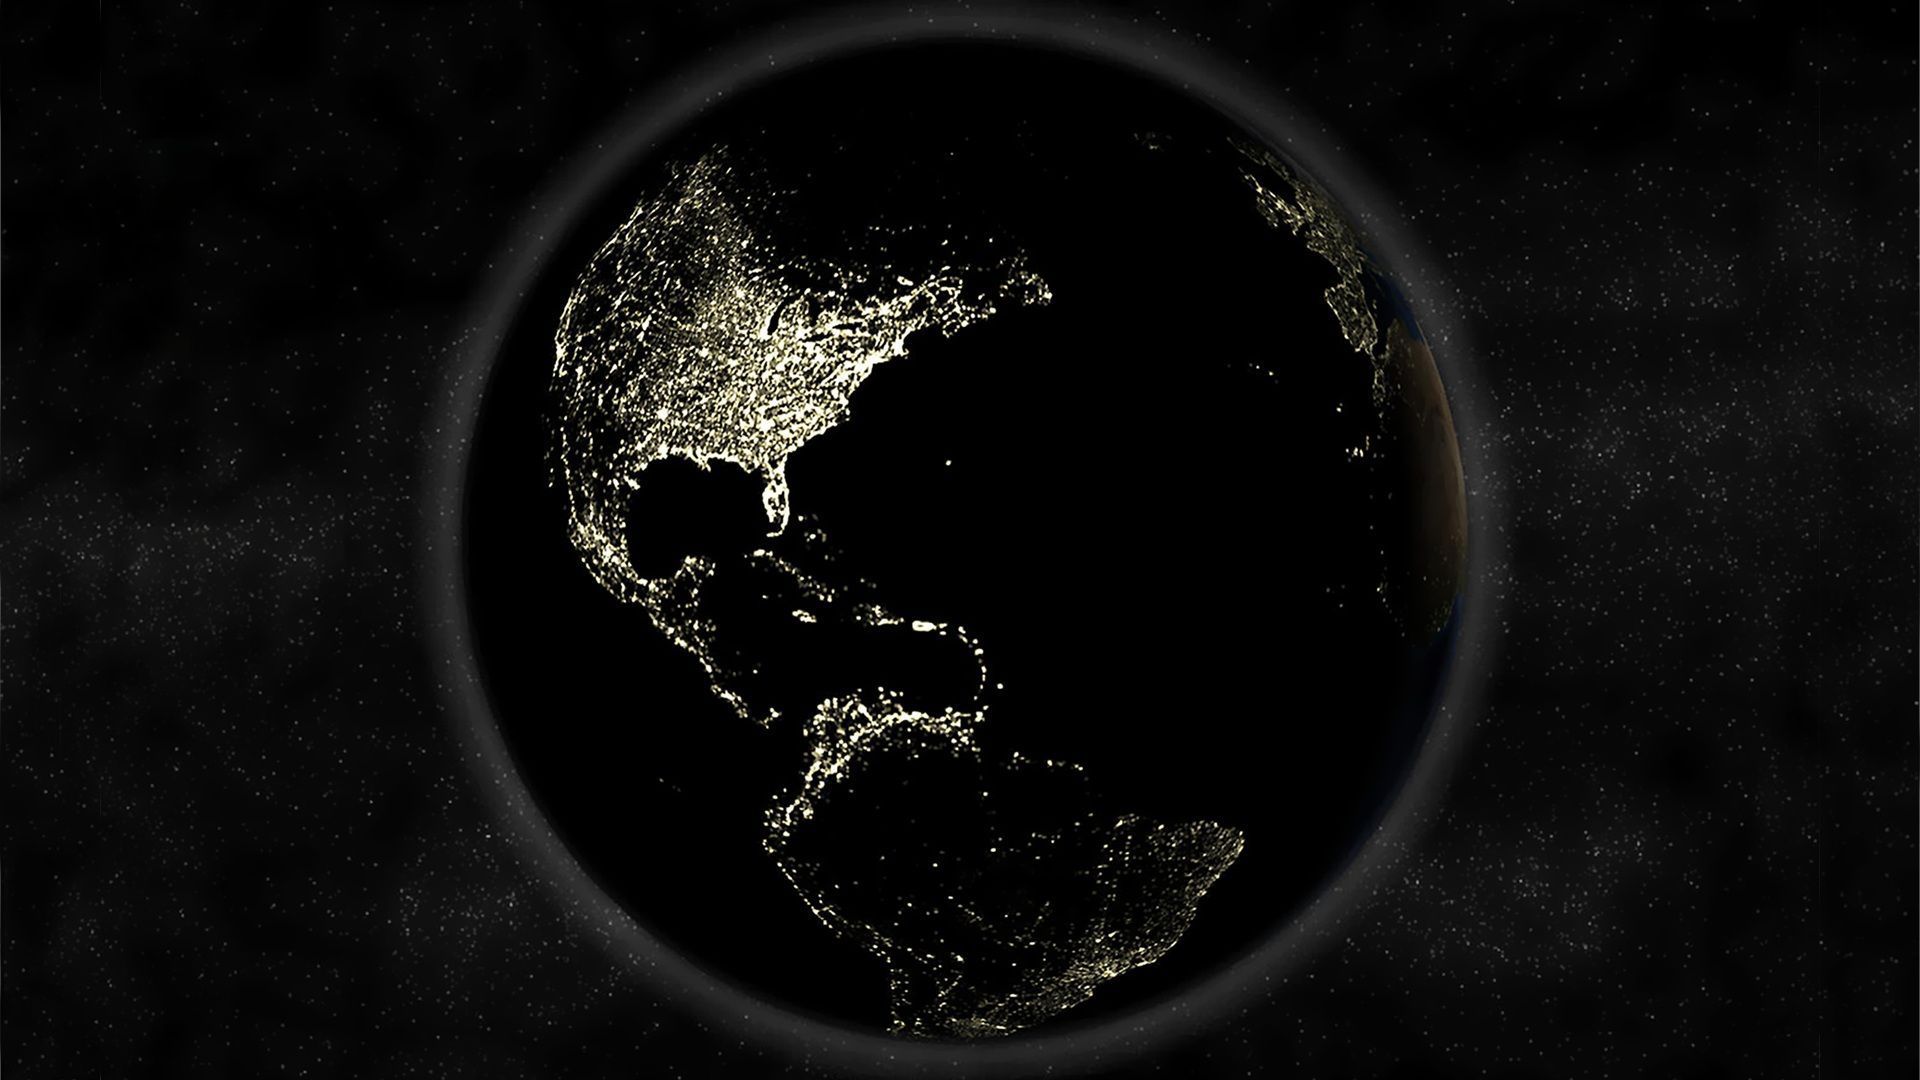 black-earth-on-space-wallpaper-download.jpg